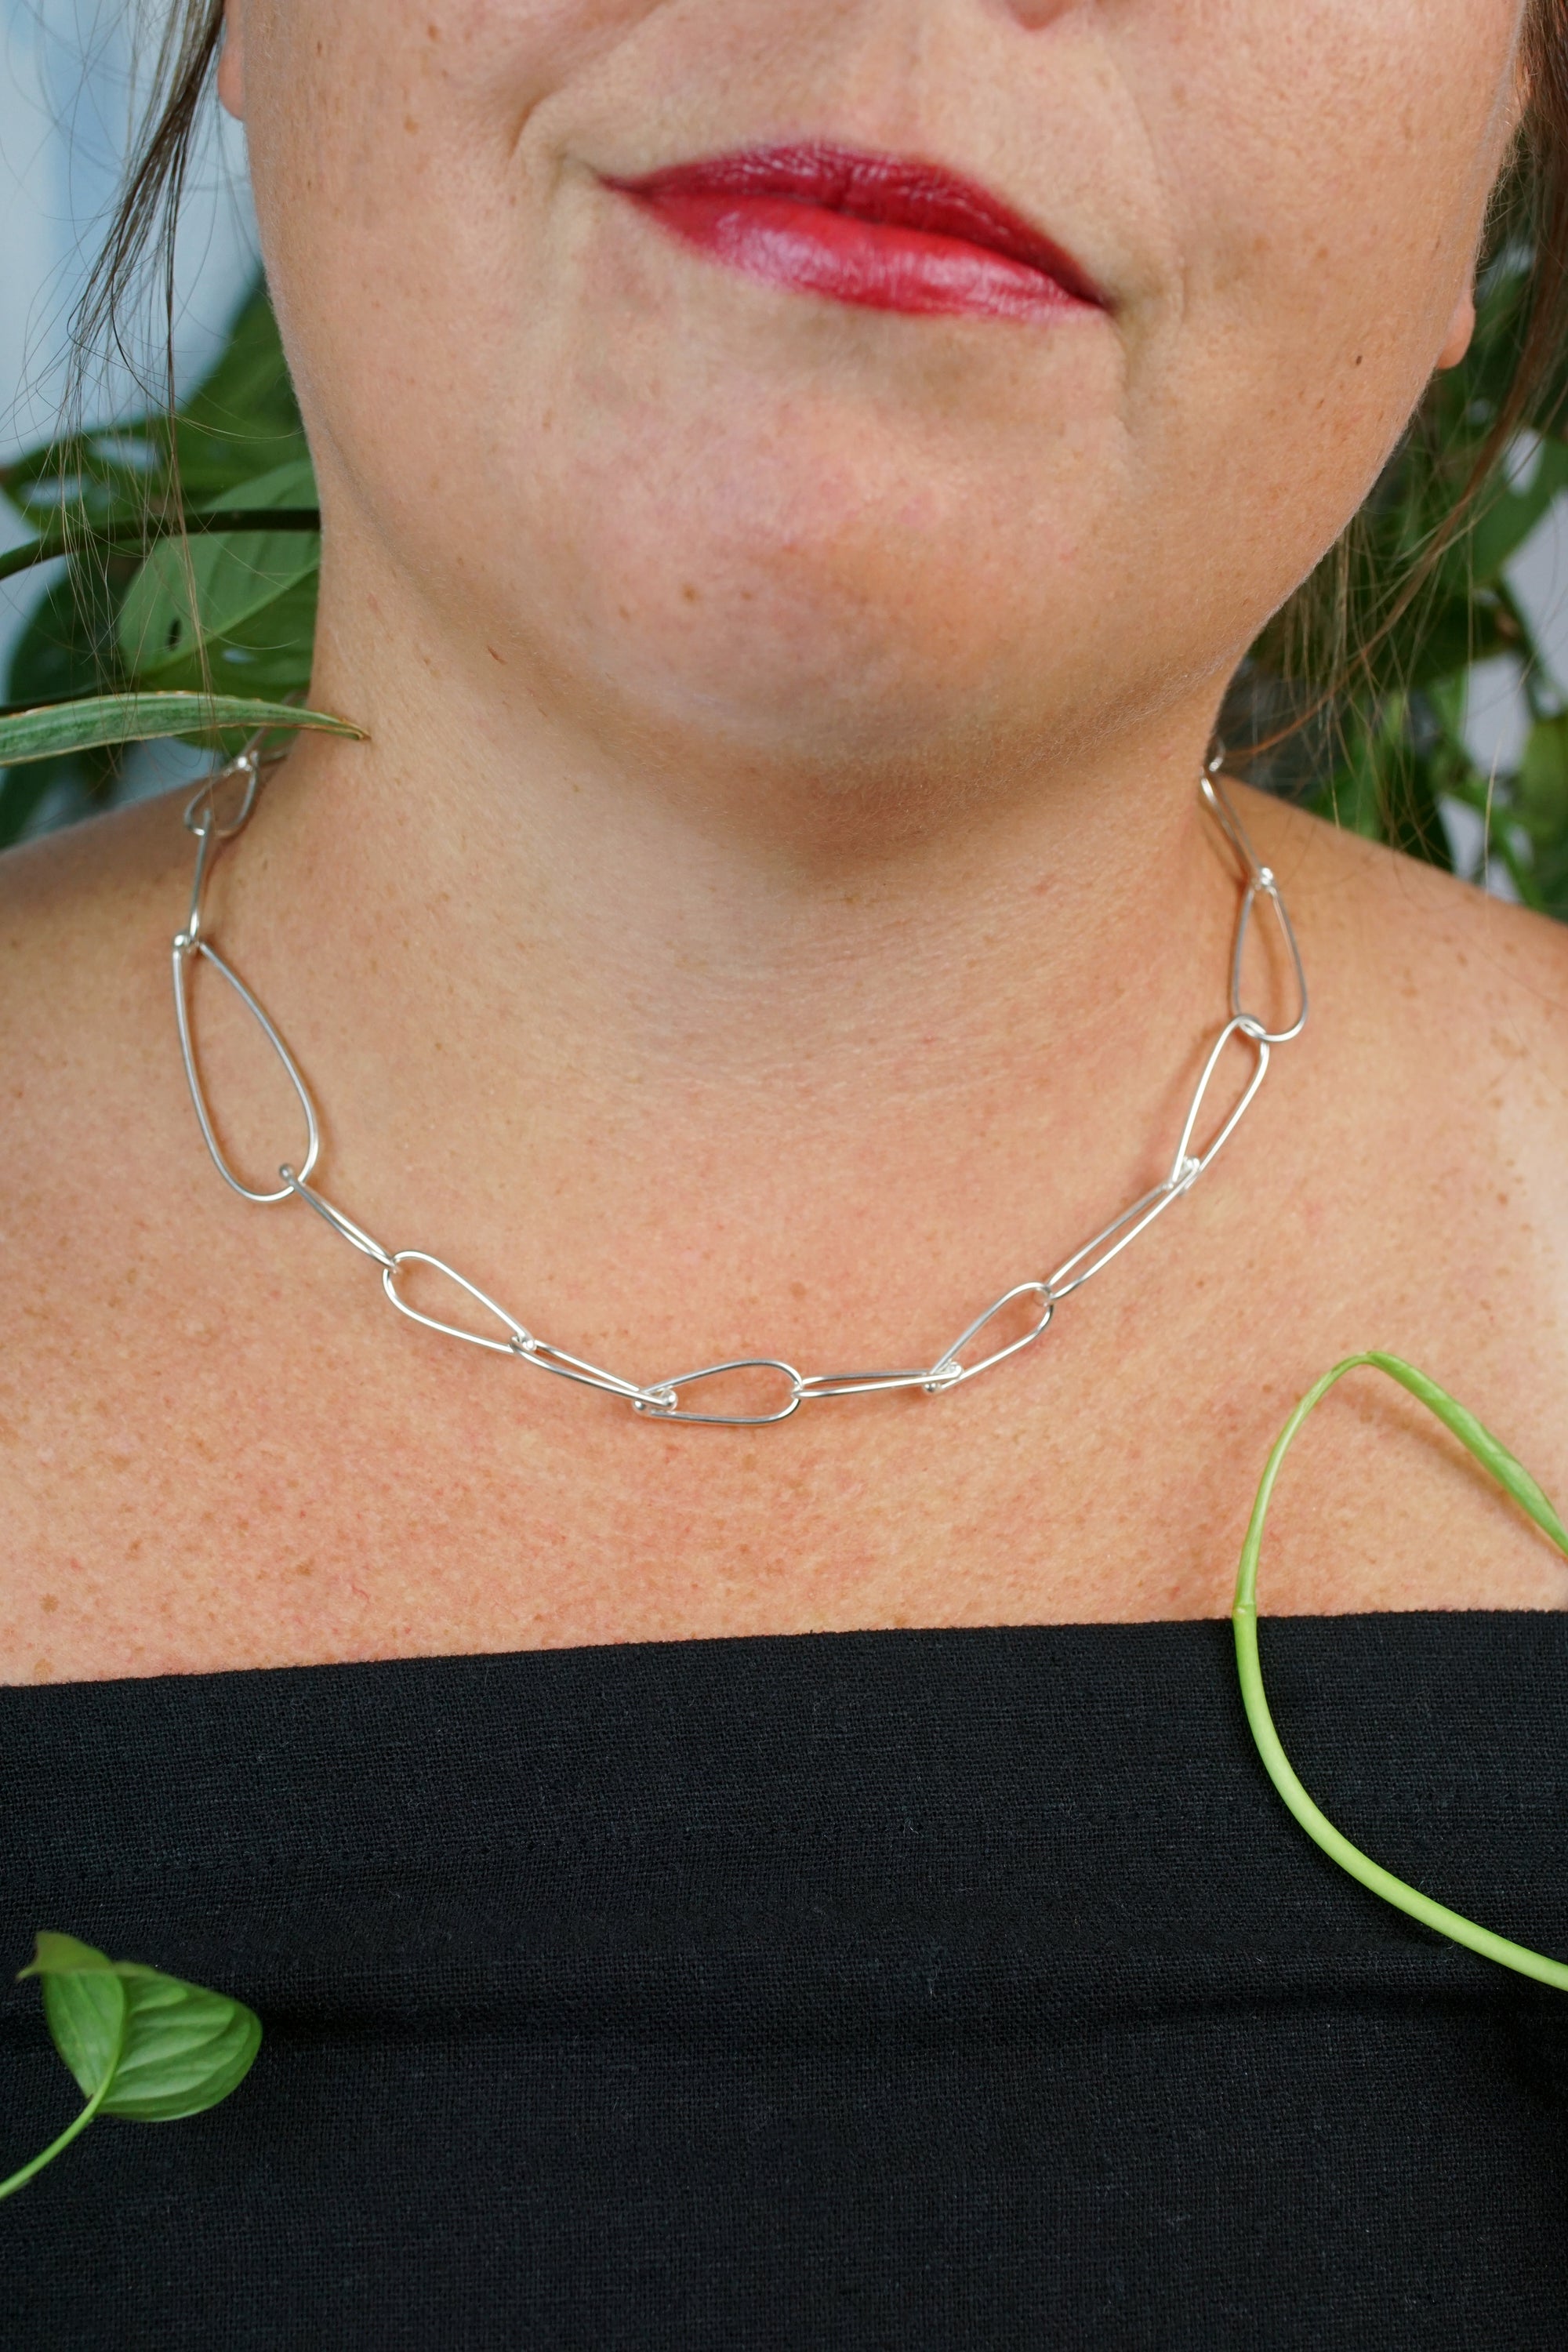 Petite Modular Necklace No. 2 in silver